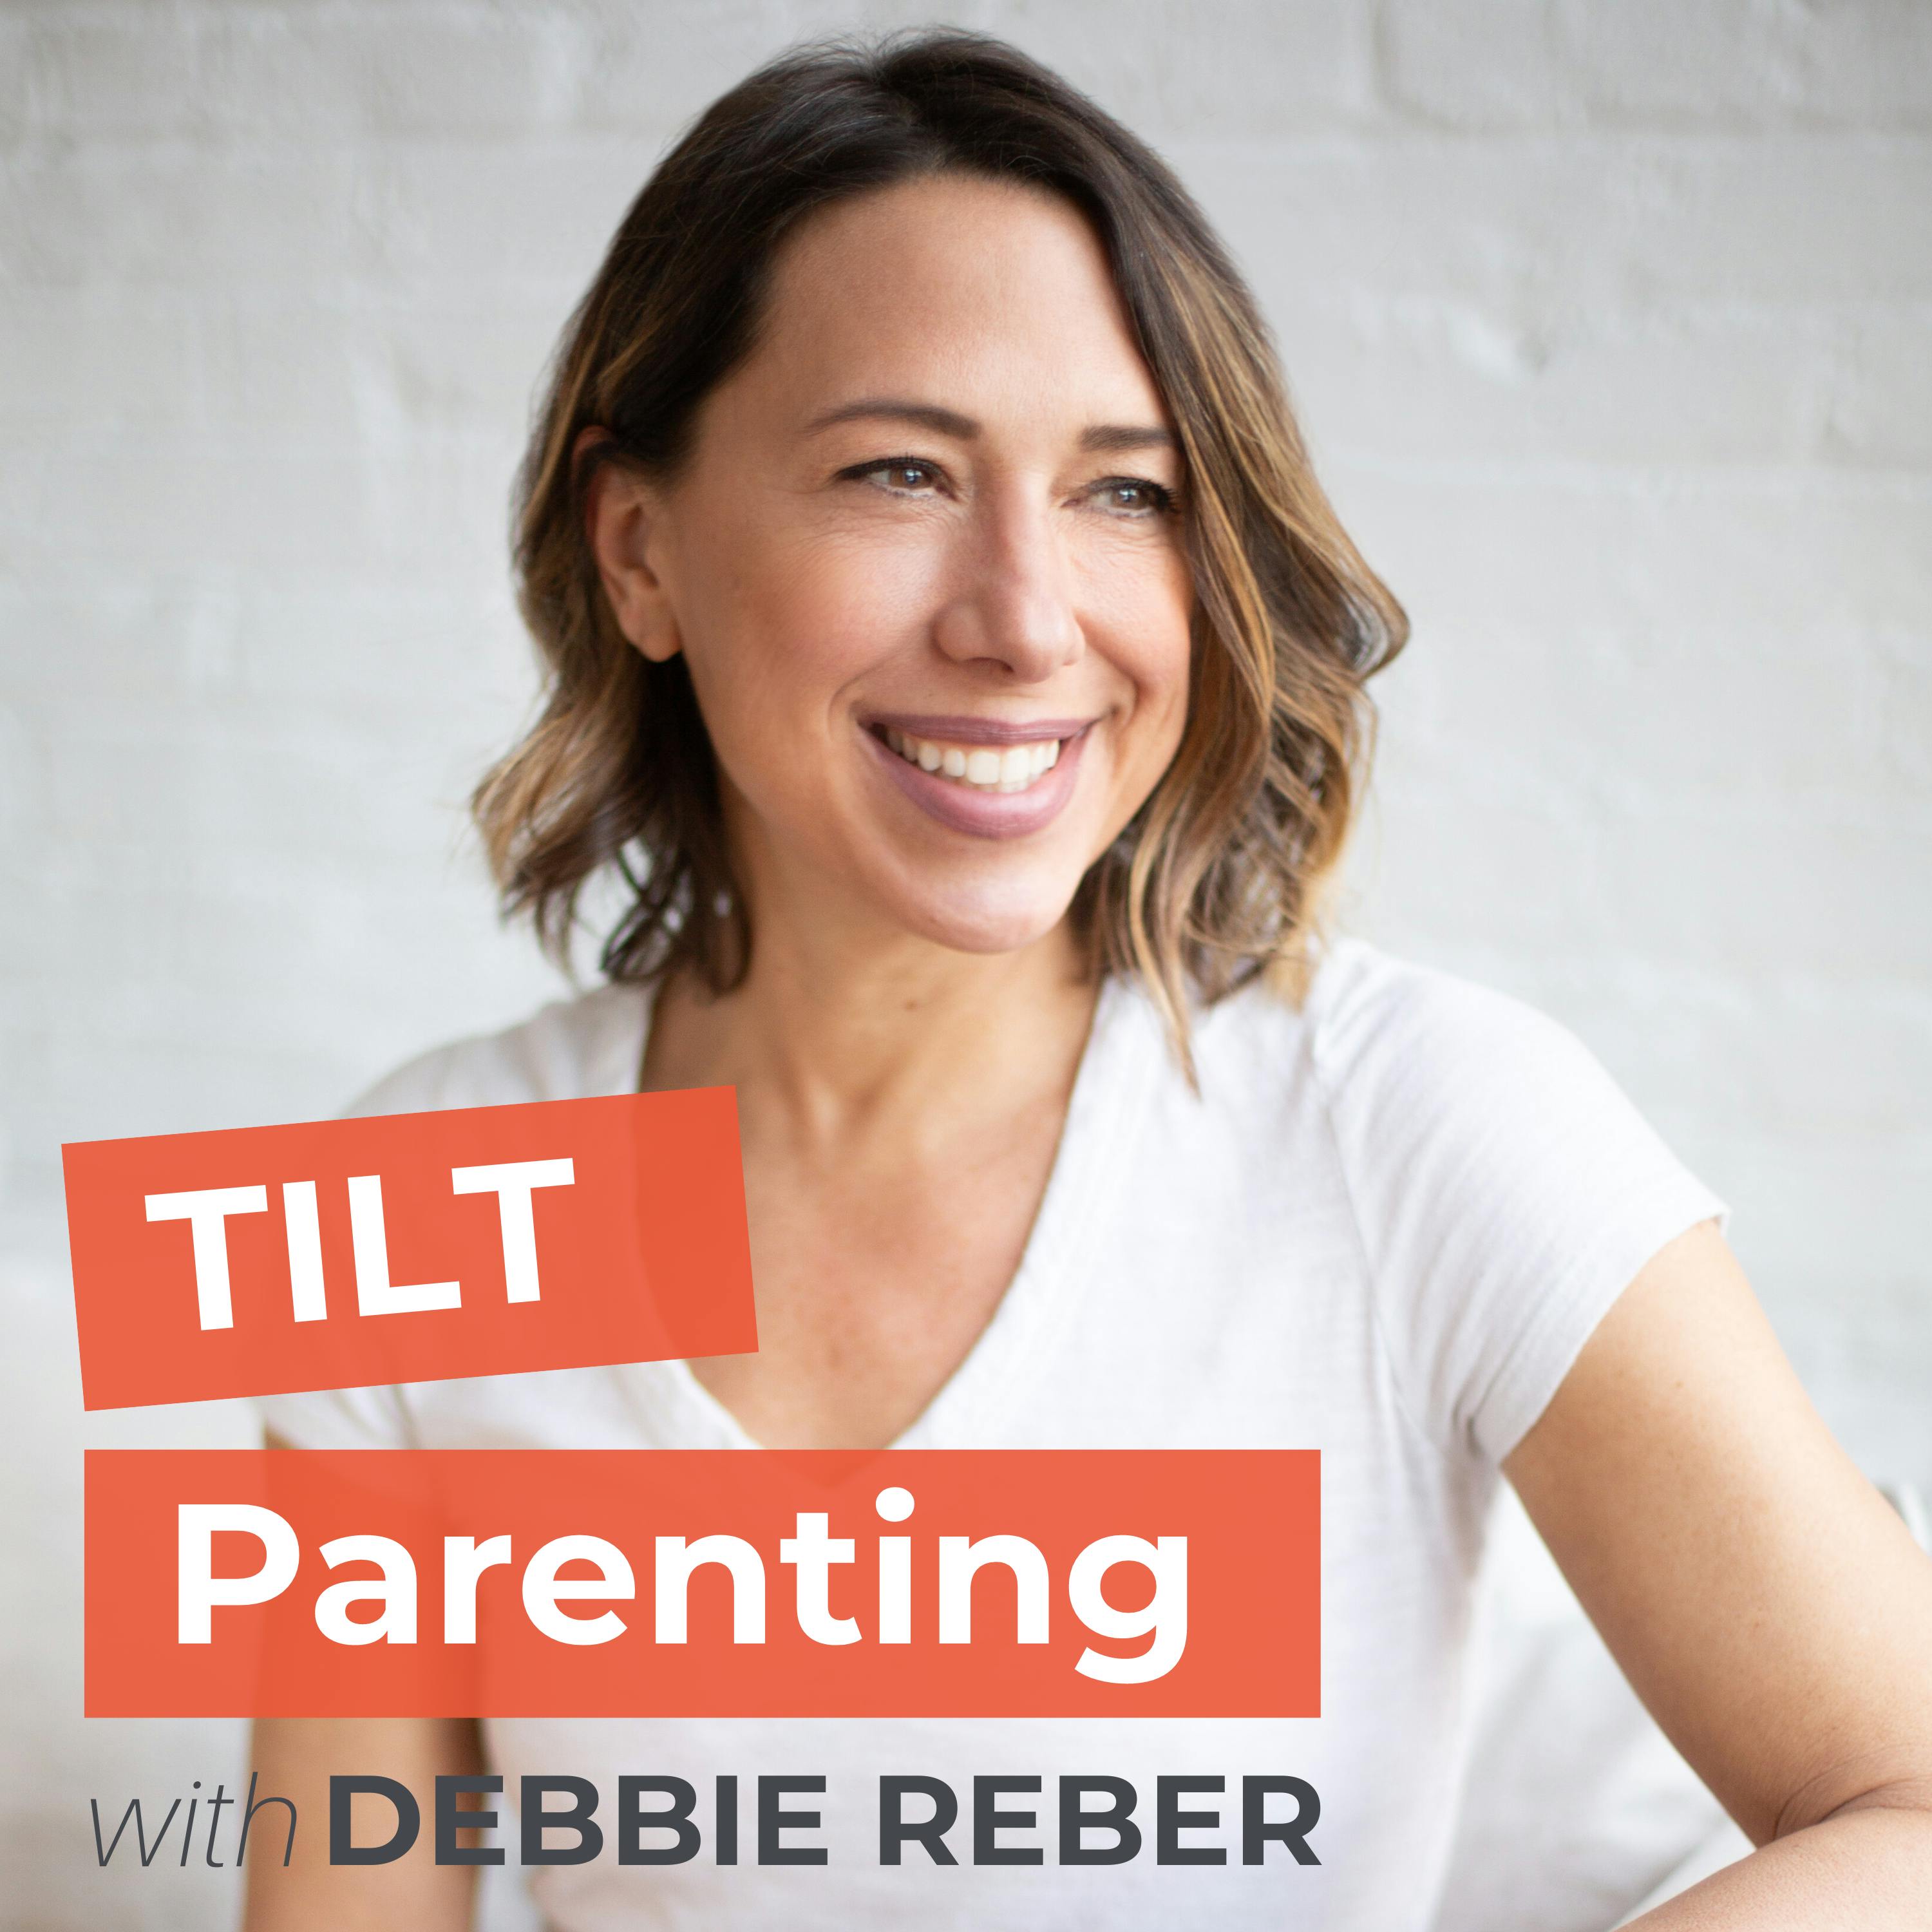 TPP 029: Lifestyle Expert Samantha Ettus on Finding Work-Life Balance as a Mom